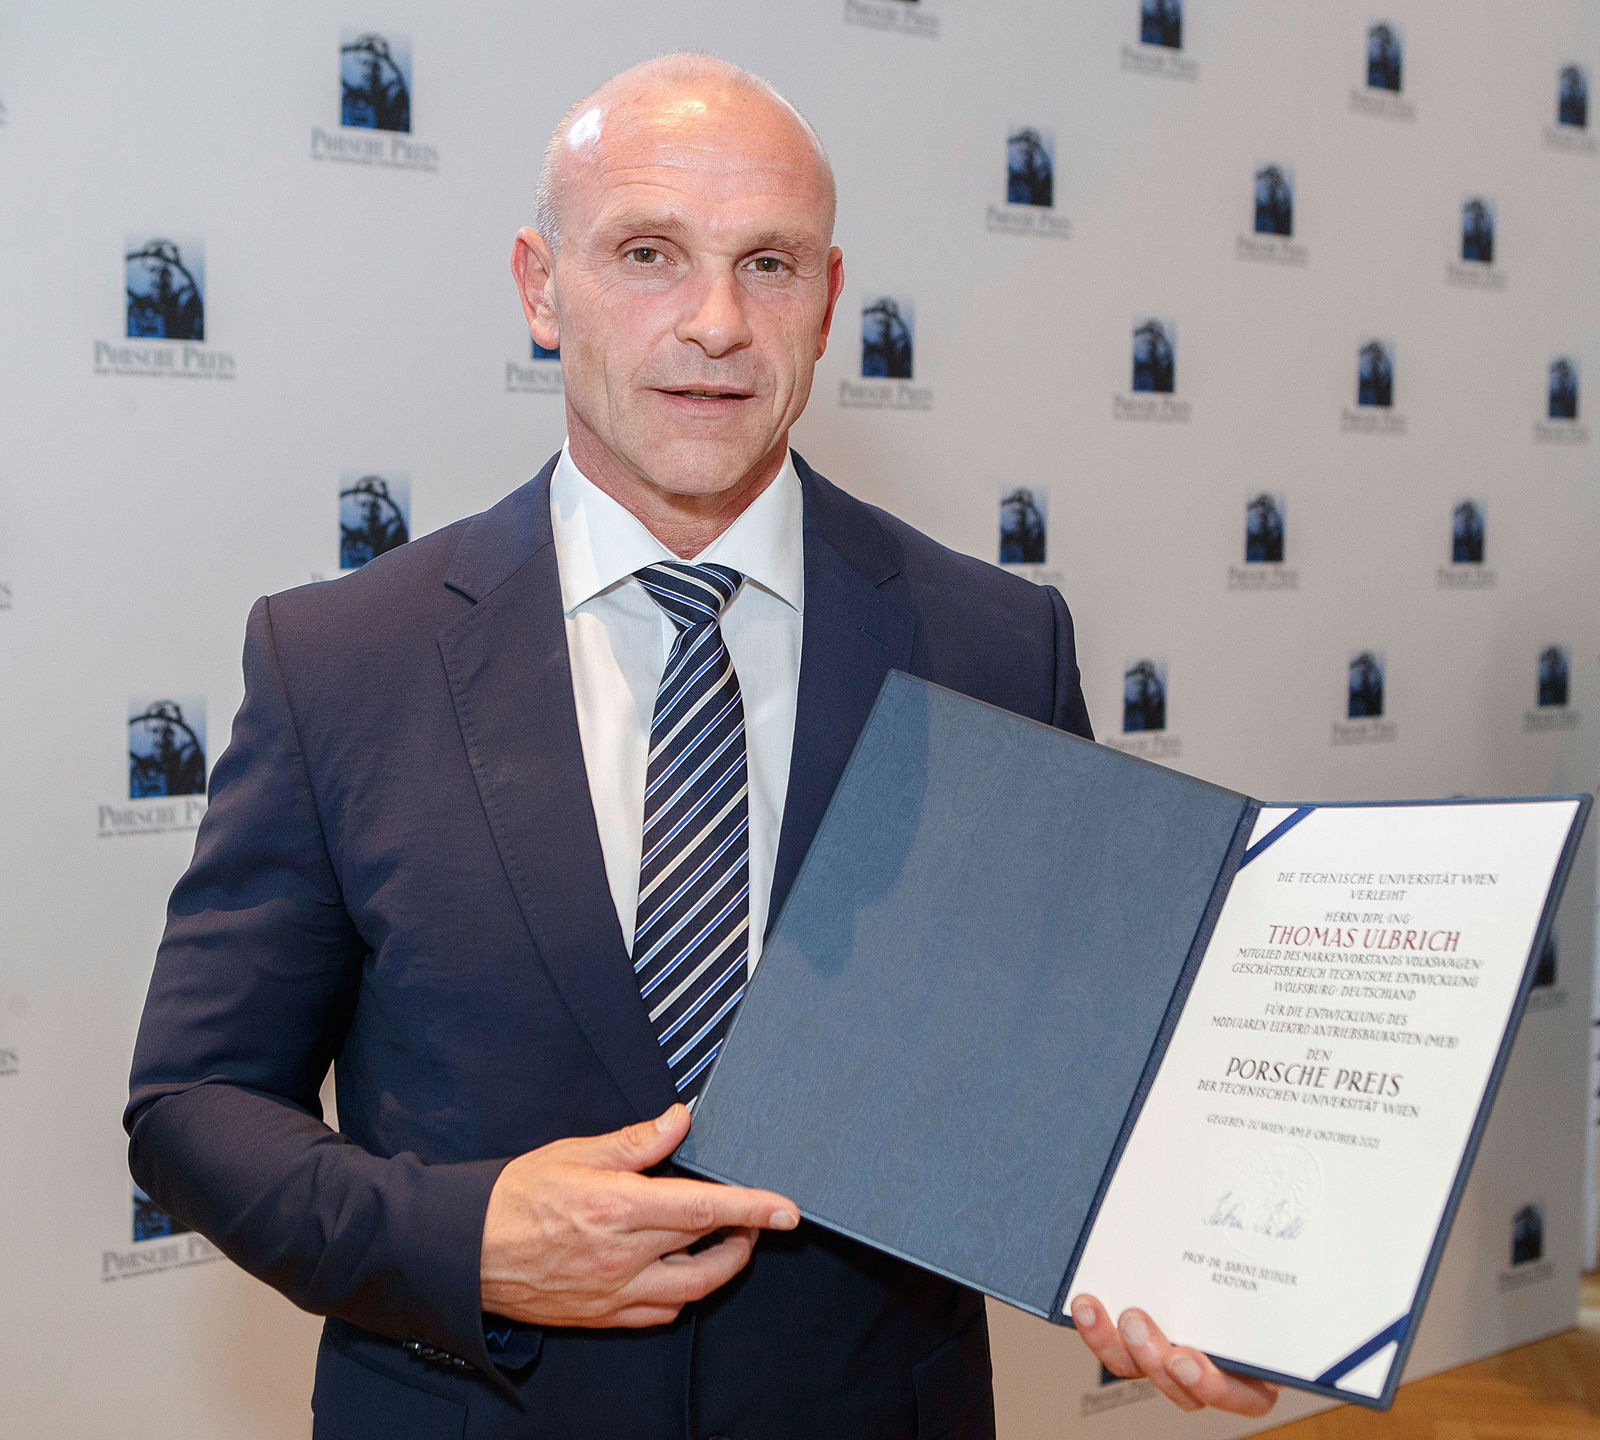 Award-winning! – Volkswagen’s electric platform wins renowned TU Wien prize